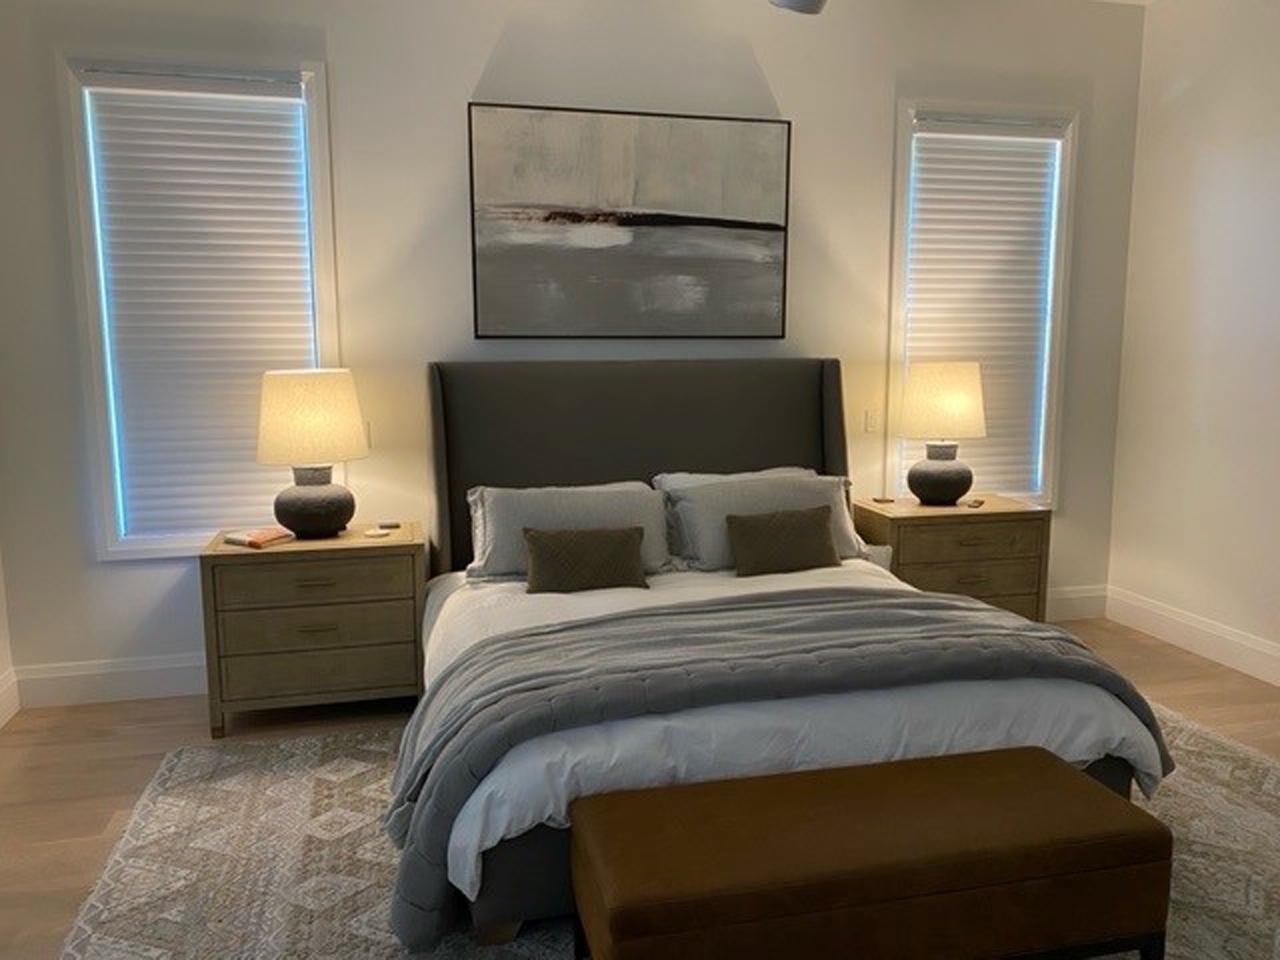 Custom blinds in a bedroom